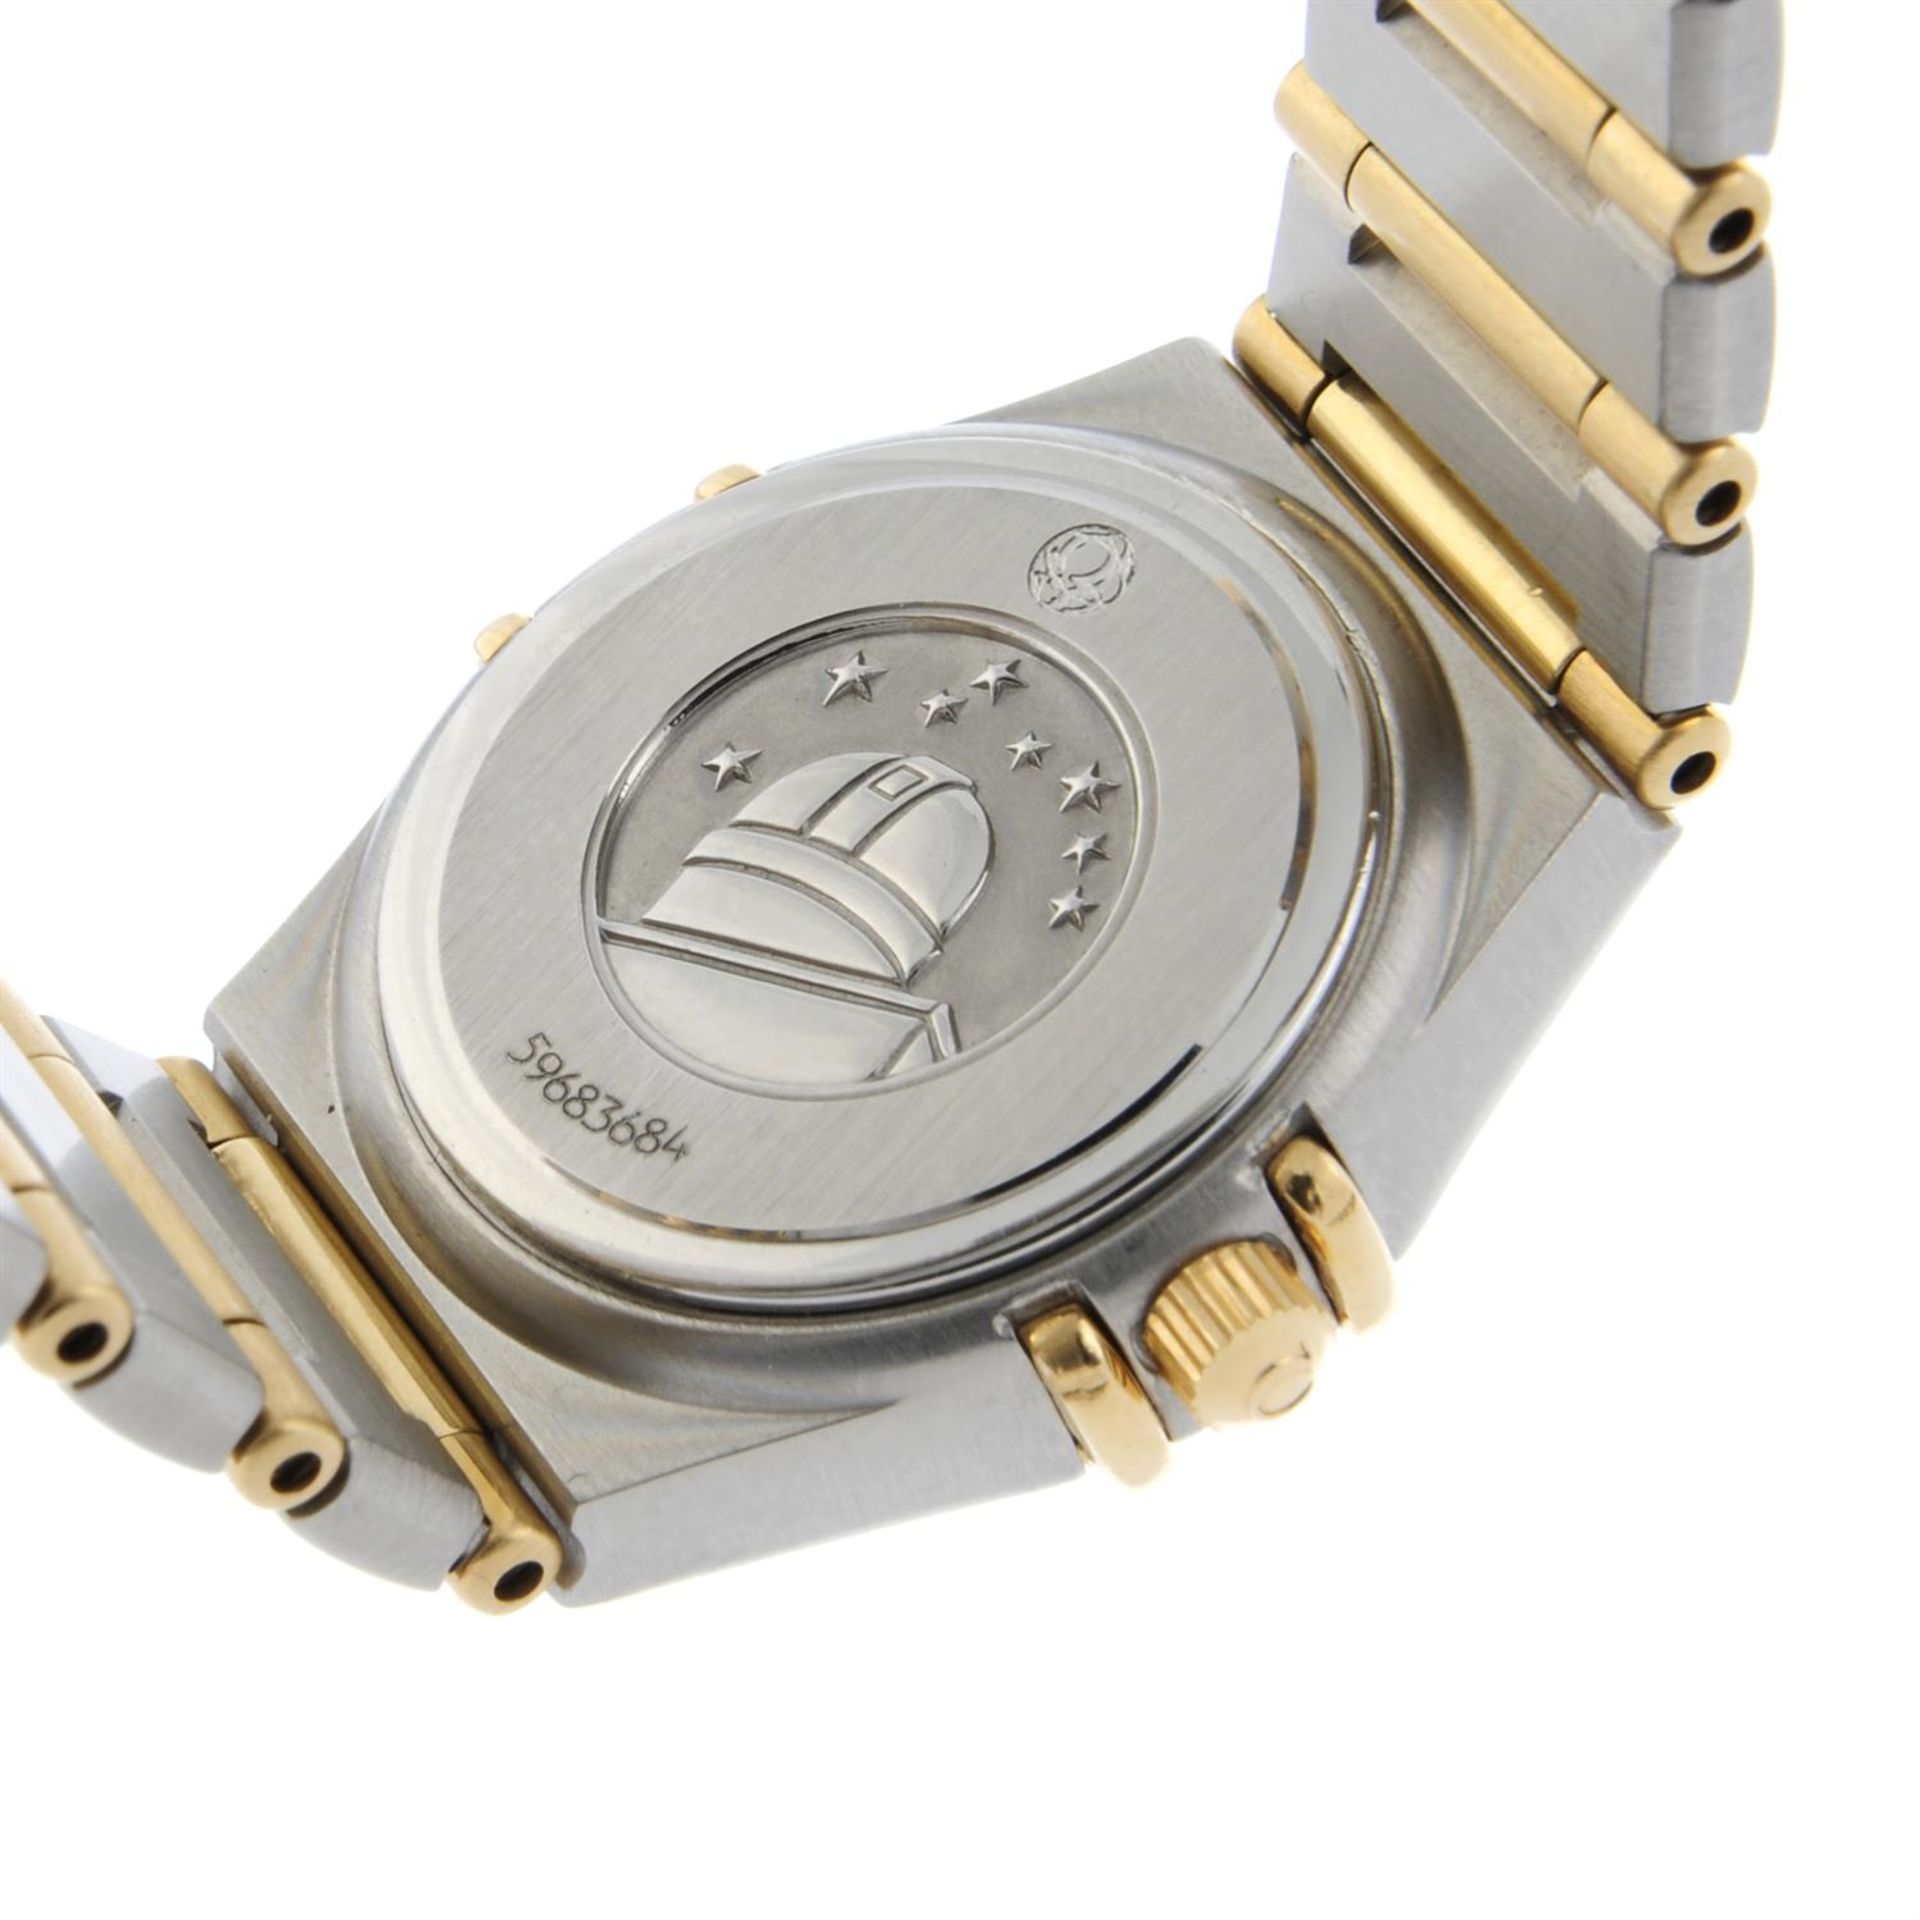 OMEGA - a factory diamond set bi-metal Constellation bracelet watch, 22.5mm - Image 4 of 5